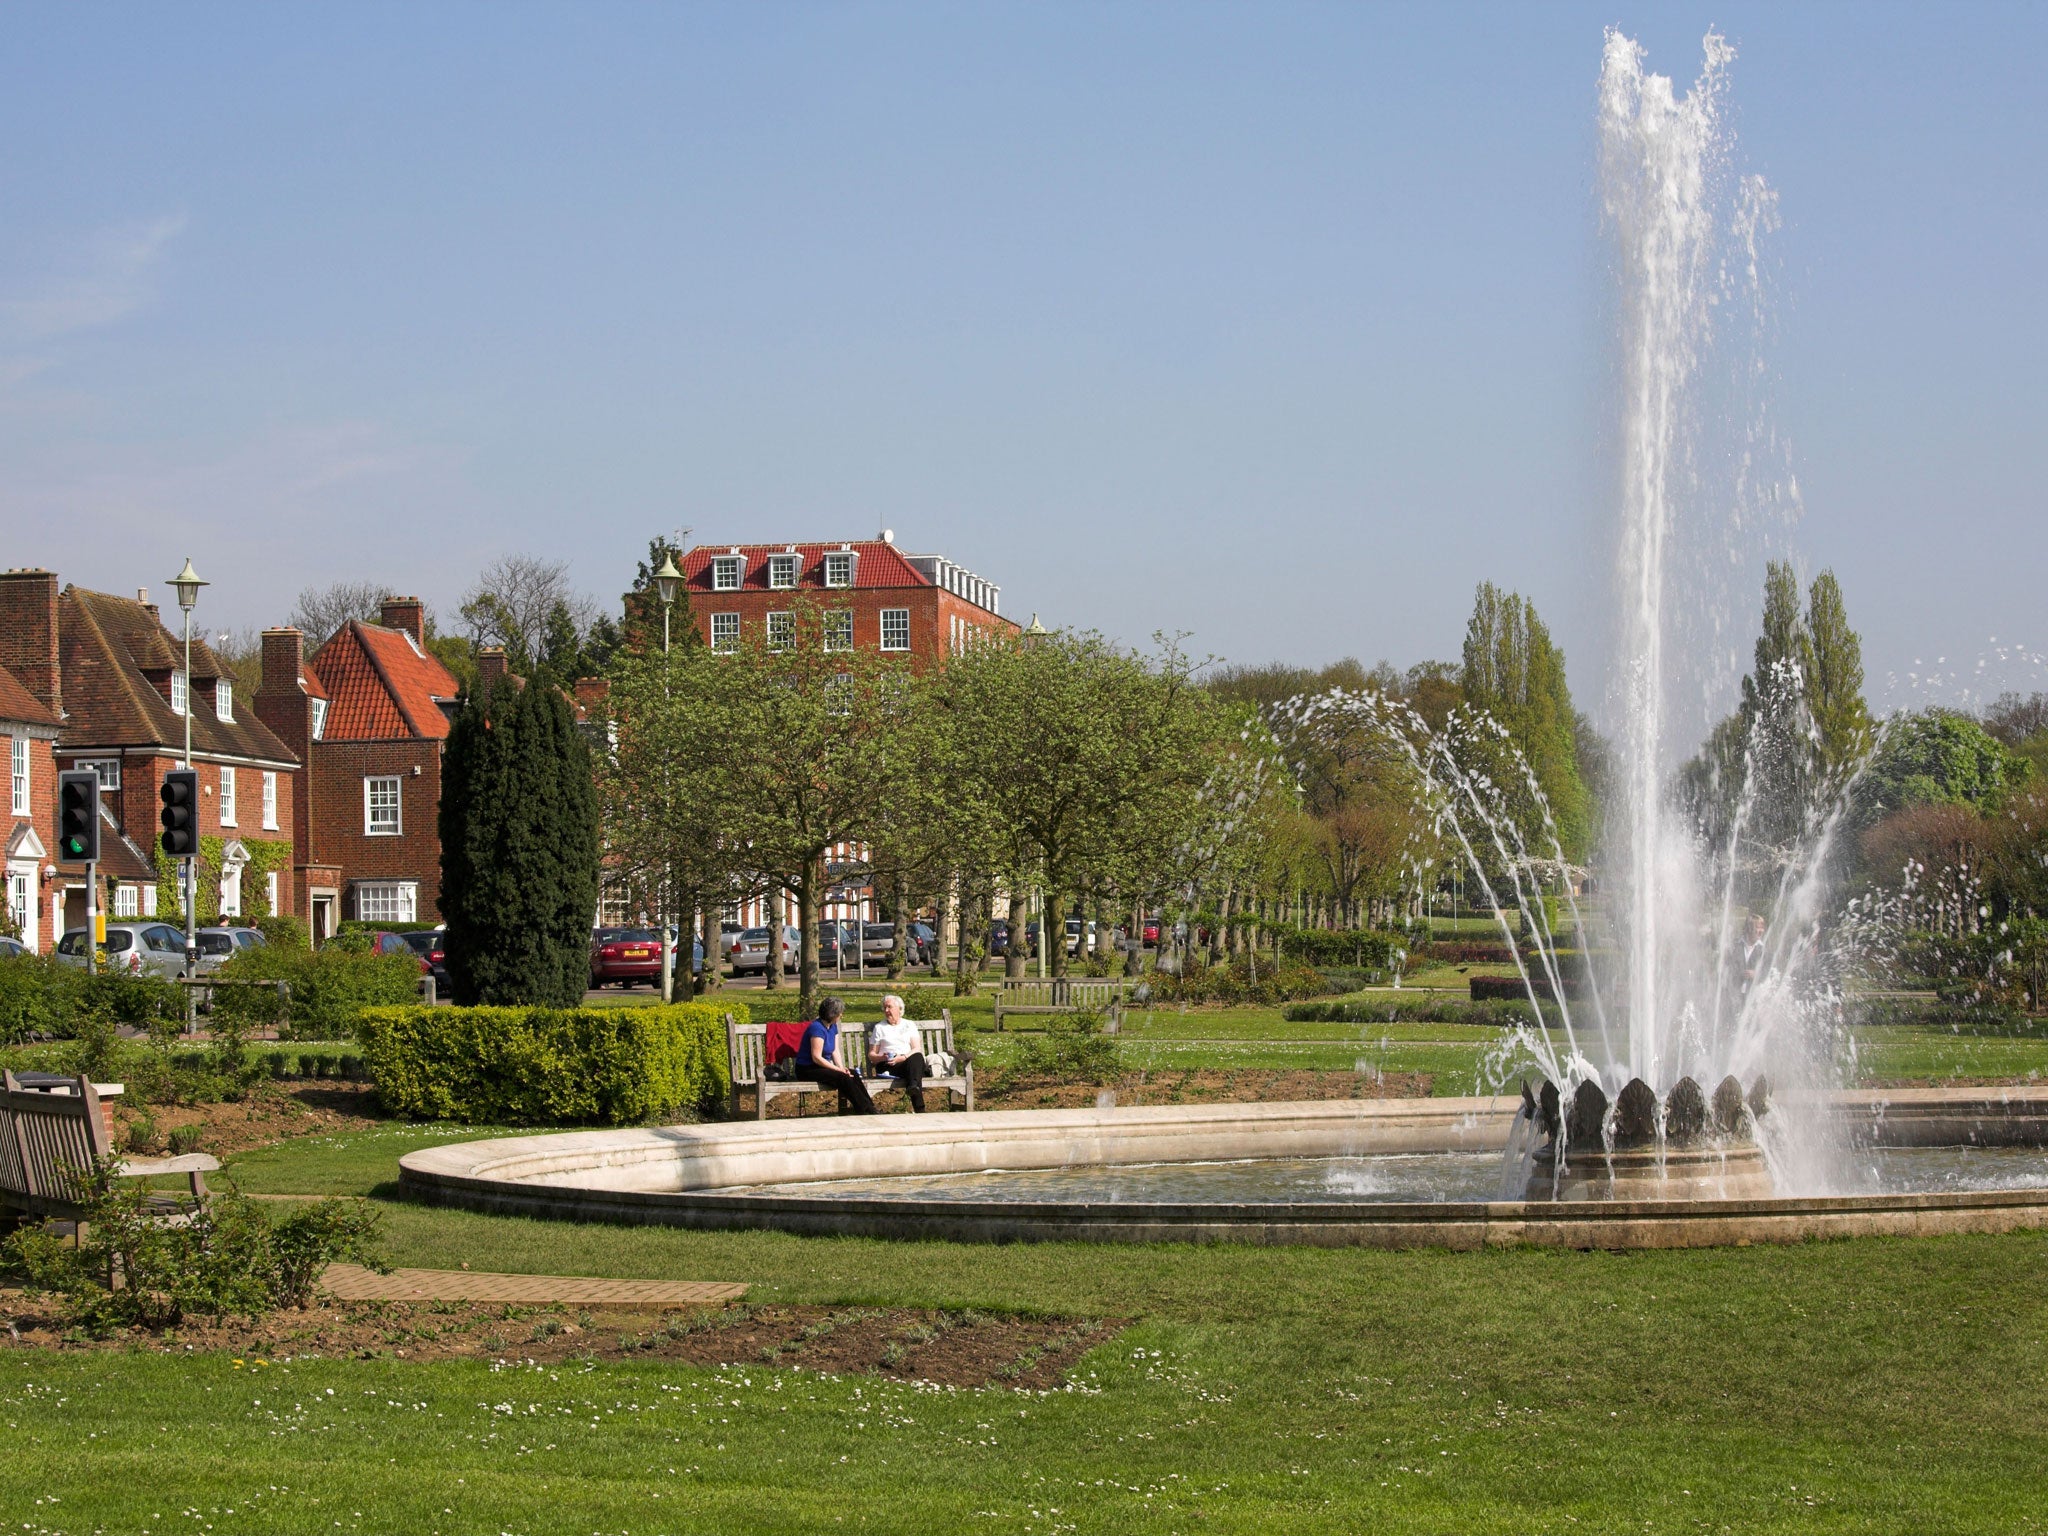 Fountain on the campus at Welwyn Garden City in Hertfordshire